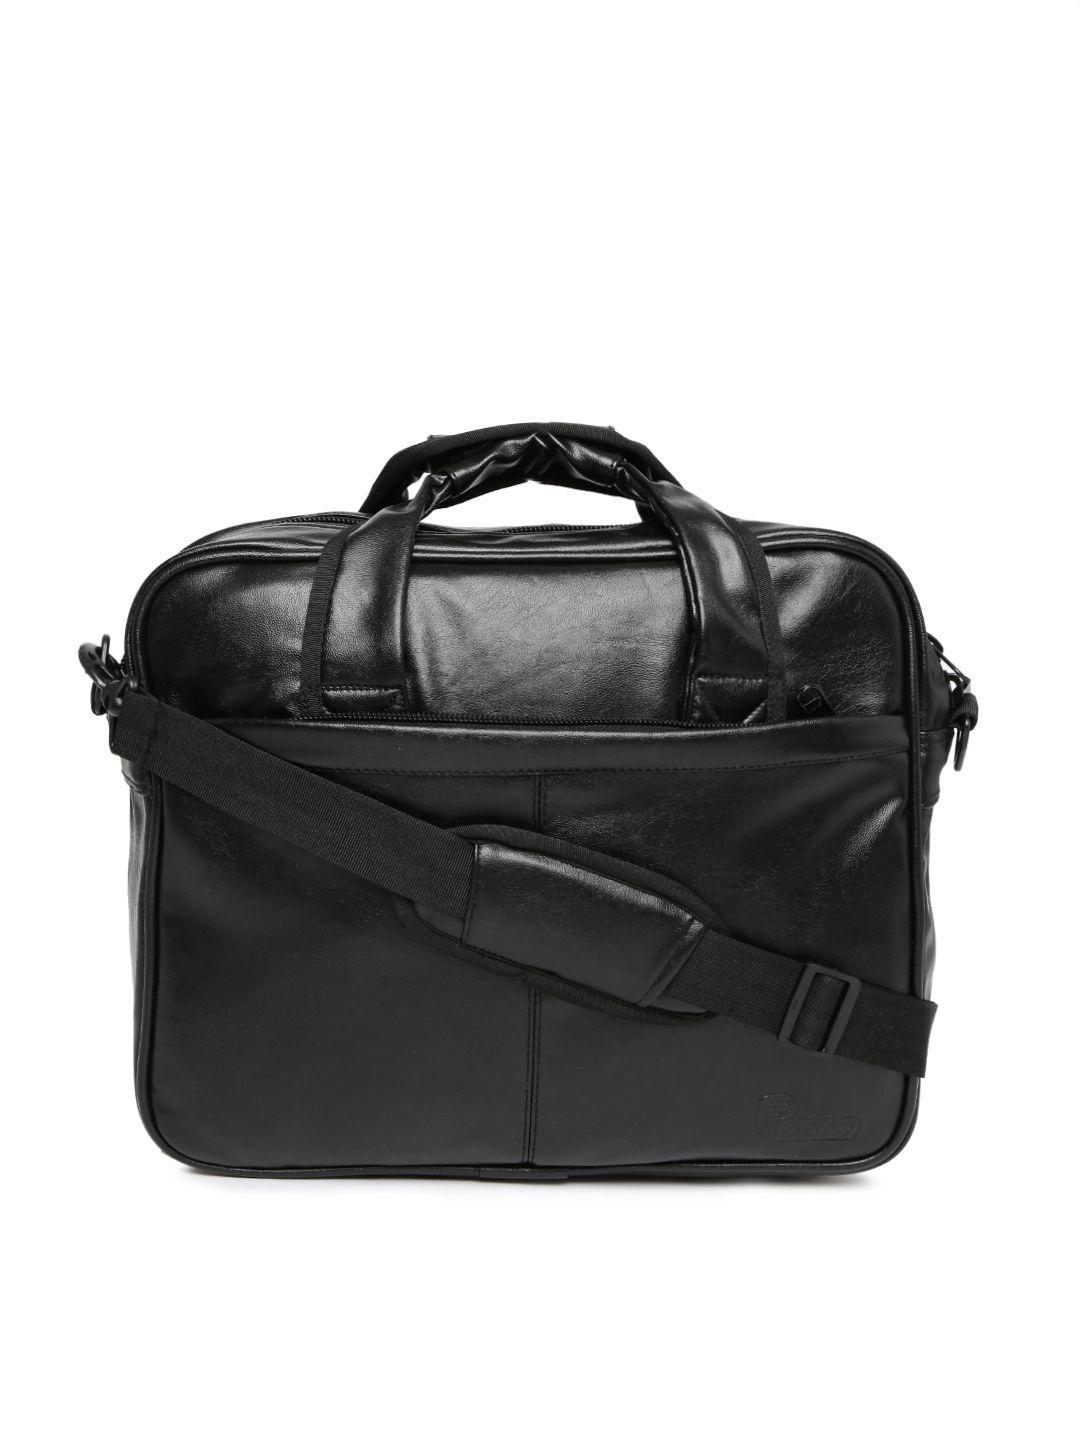 f gear unisex black laptop bag